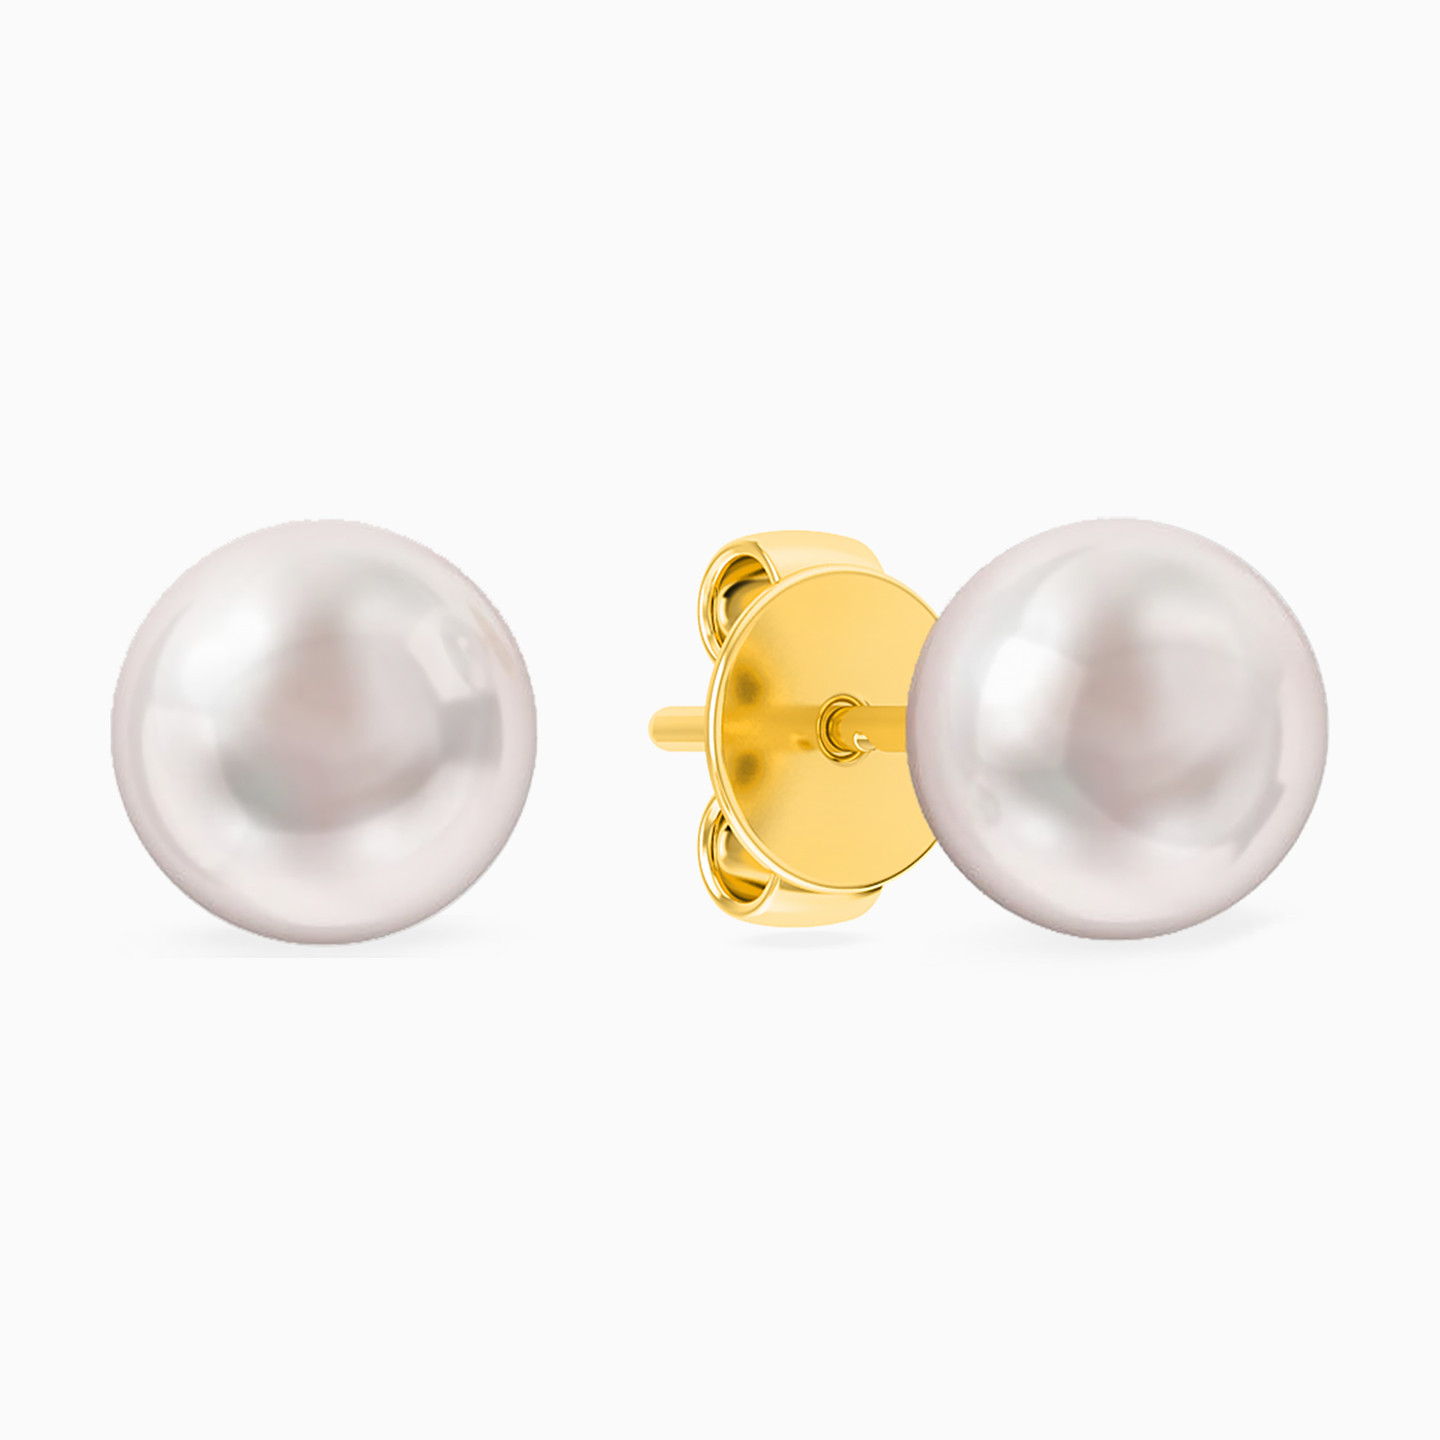 18K Gold Pearls Stud Earrings - 2